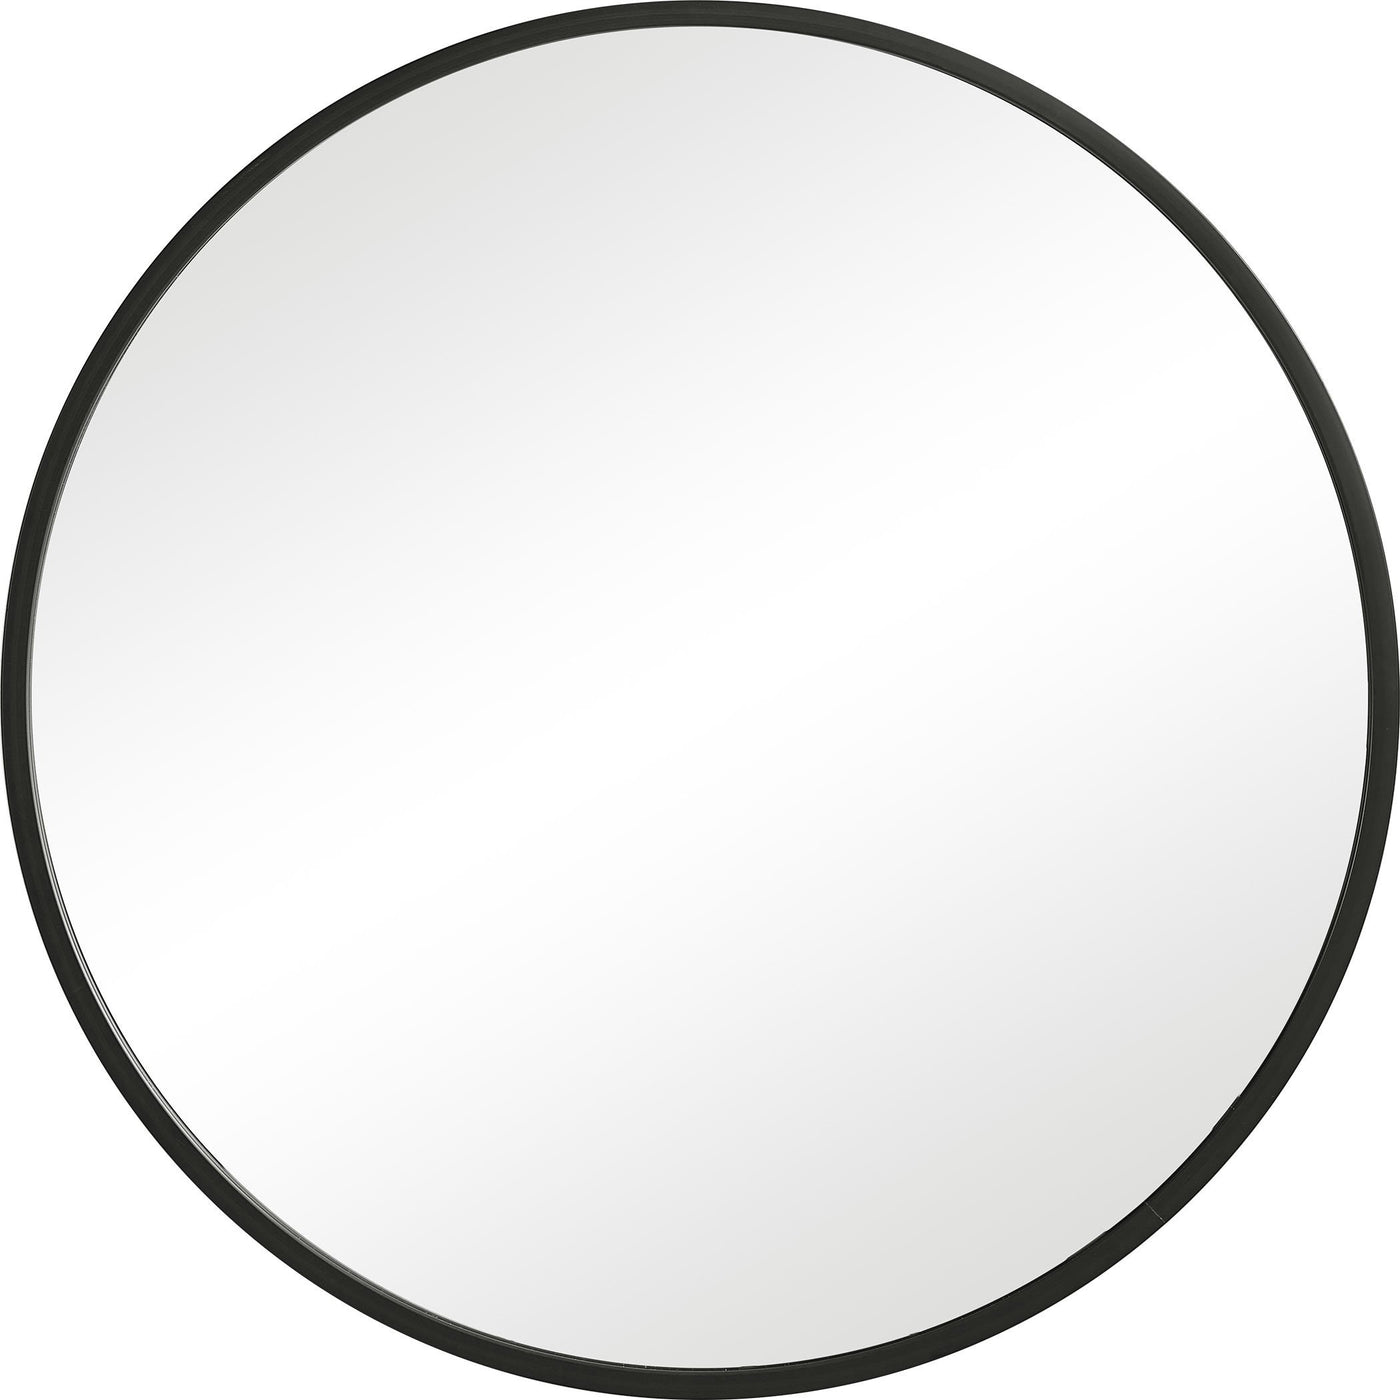 The Sag Harbor - Large Black Round Framed Bathroom Vanity Mirror - Glass.com